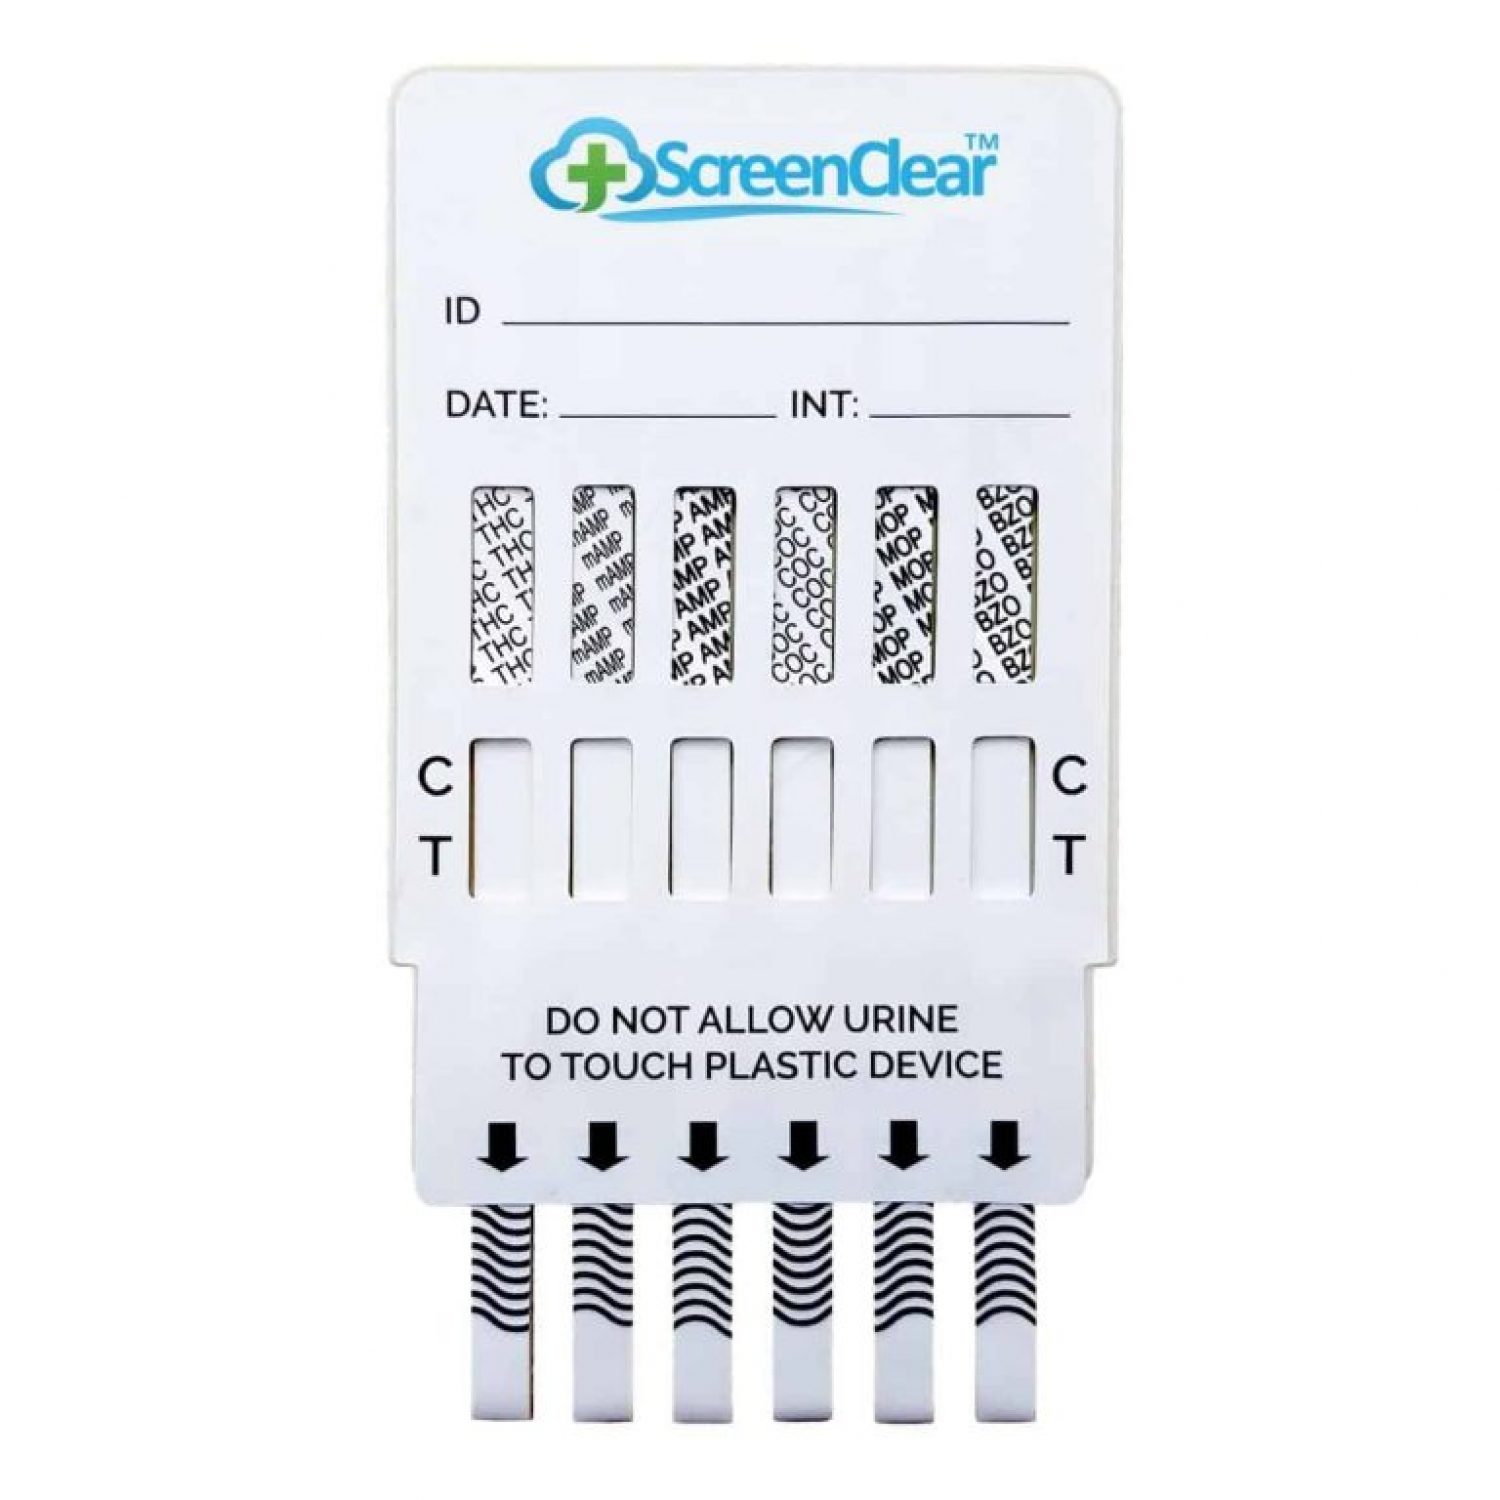 ScreenClear 6 panel urine dip card, THC, COC, OPI, MET, AMP, BZO.